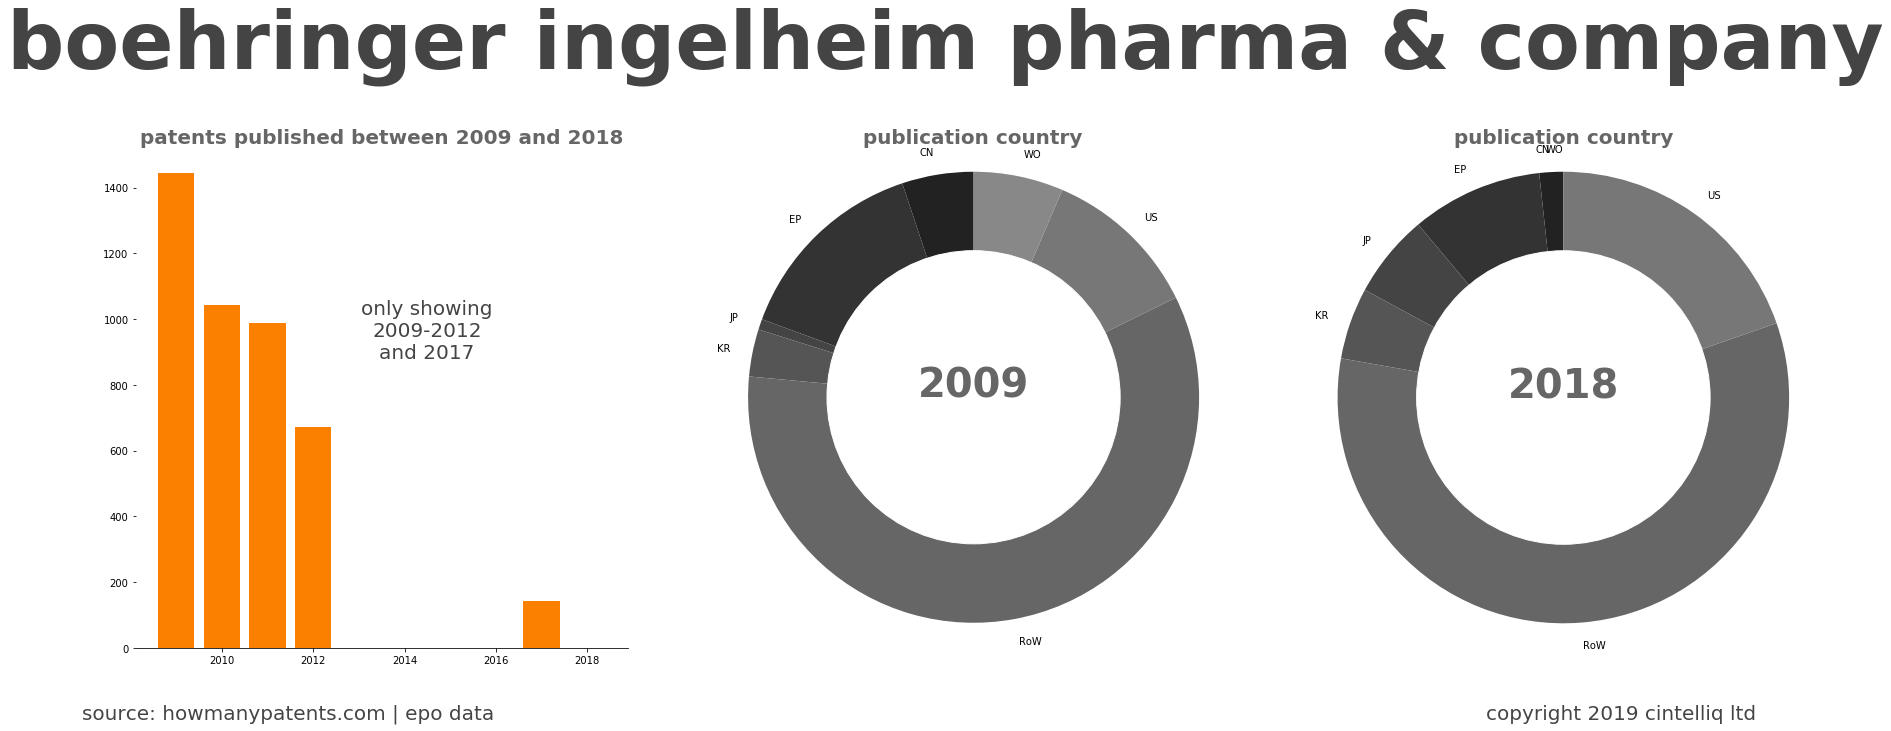 summary of patents for Boehringer Ingelheim Pharma & Company